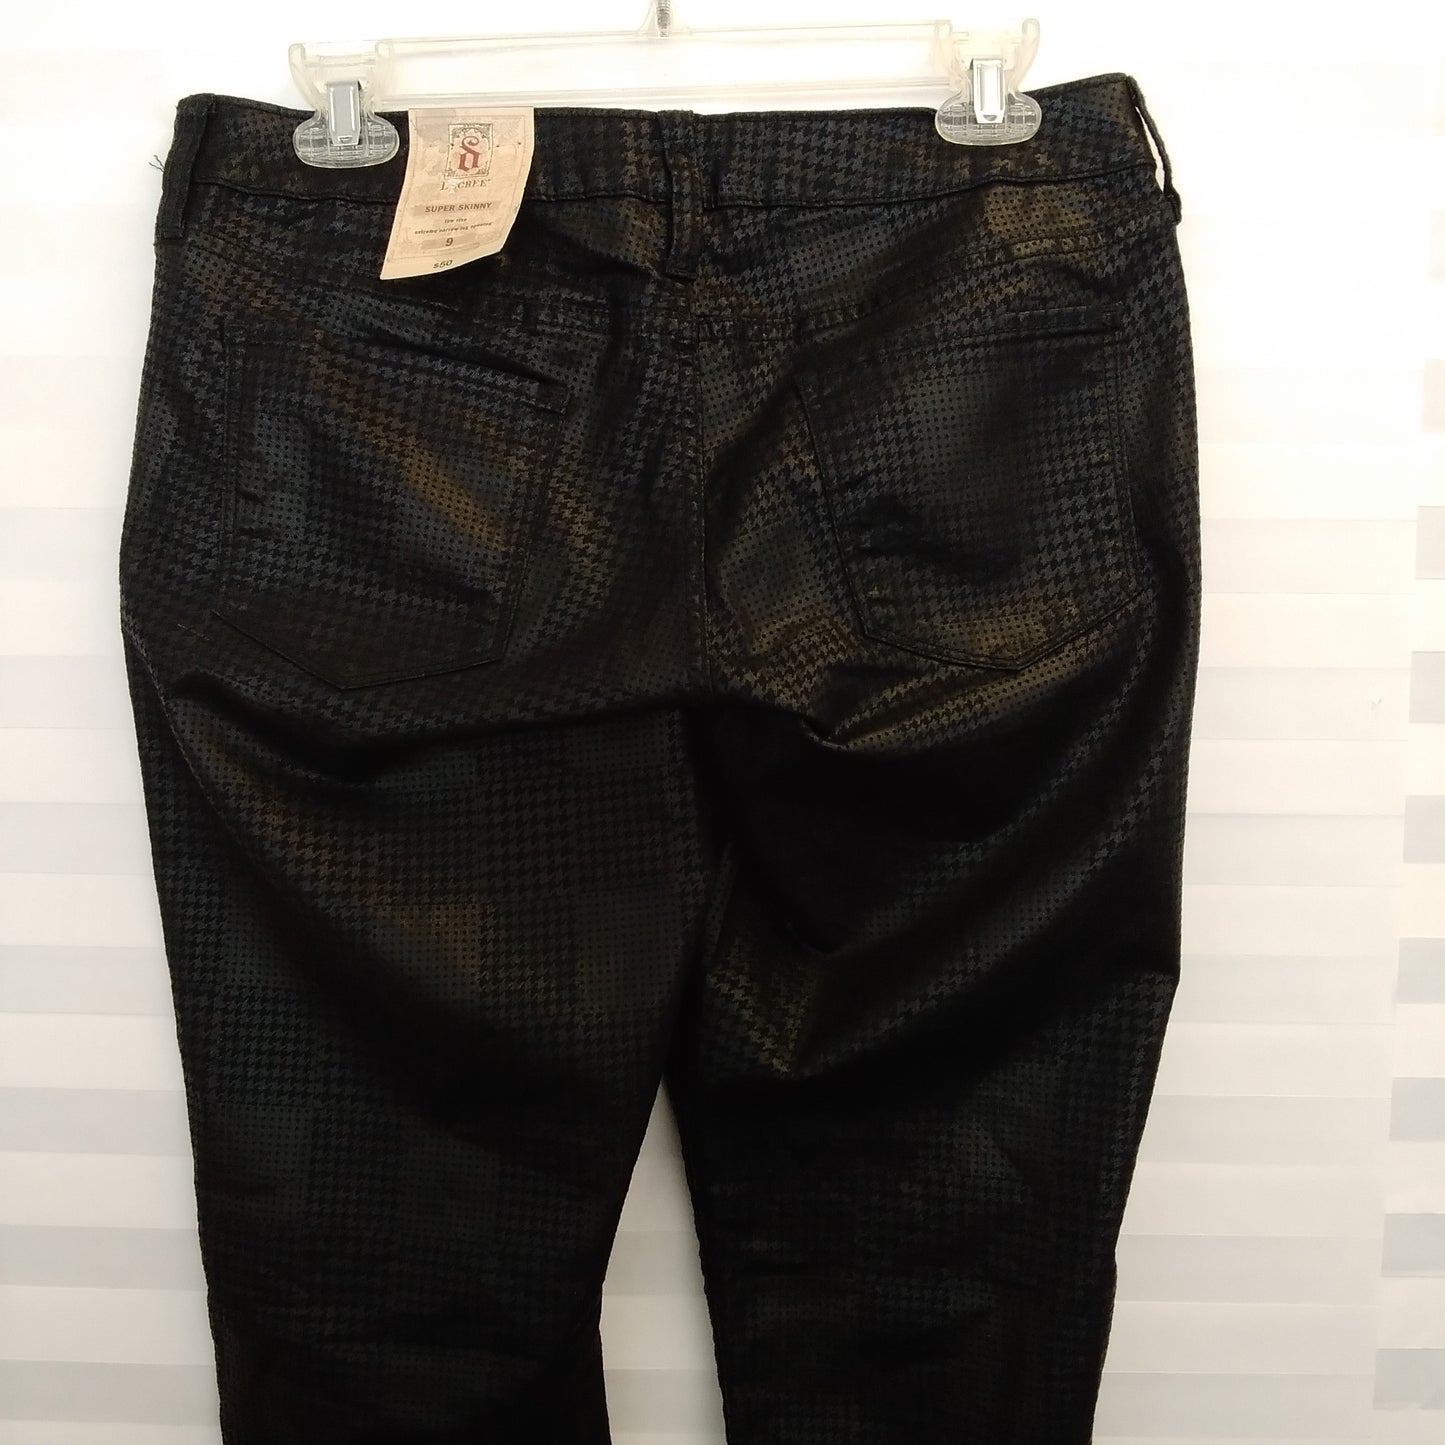 NWT - Decree Women's Black Houndstooth Plaid Super Skinny Pants - Size 9